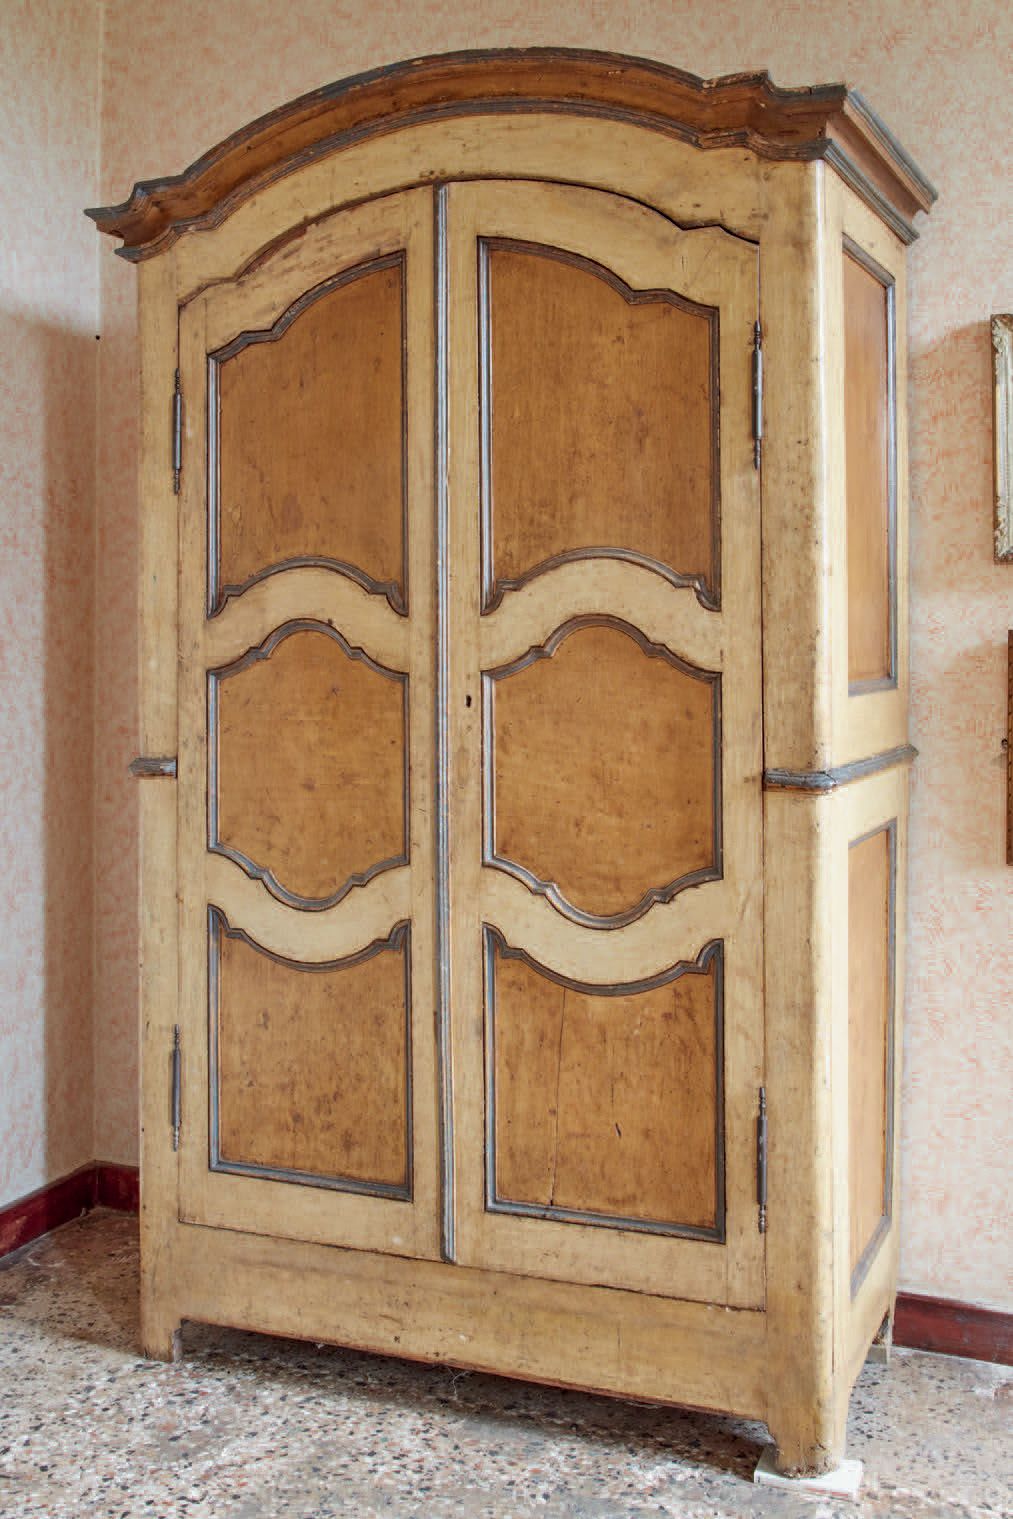 Null 白色和金黄色漆面的木制衣柜，有两个前门，最后是一个清醒的檐口，皮埃蒙特，18世纪（缺陷）
Armoire en bois laqué blanc et&hellip;